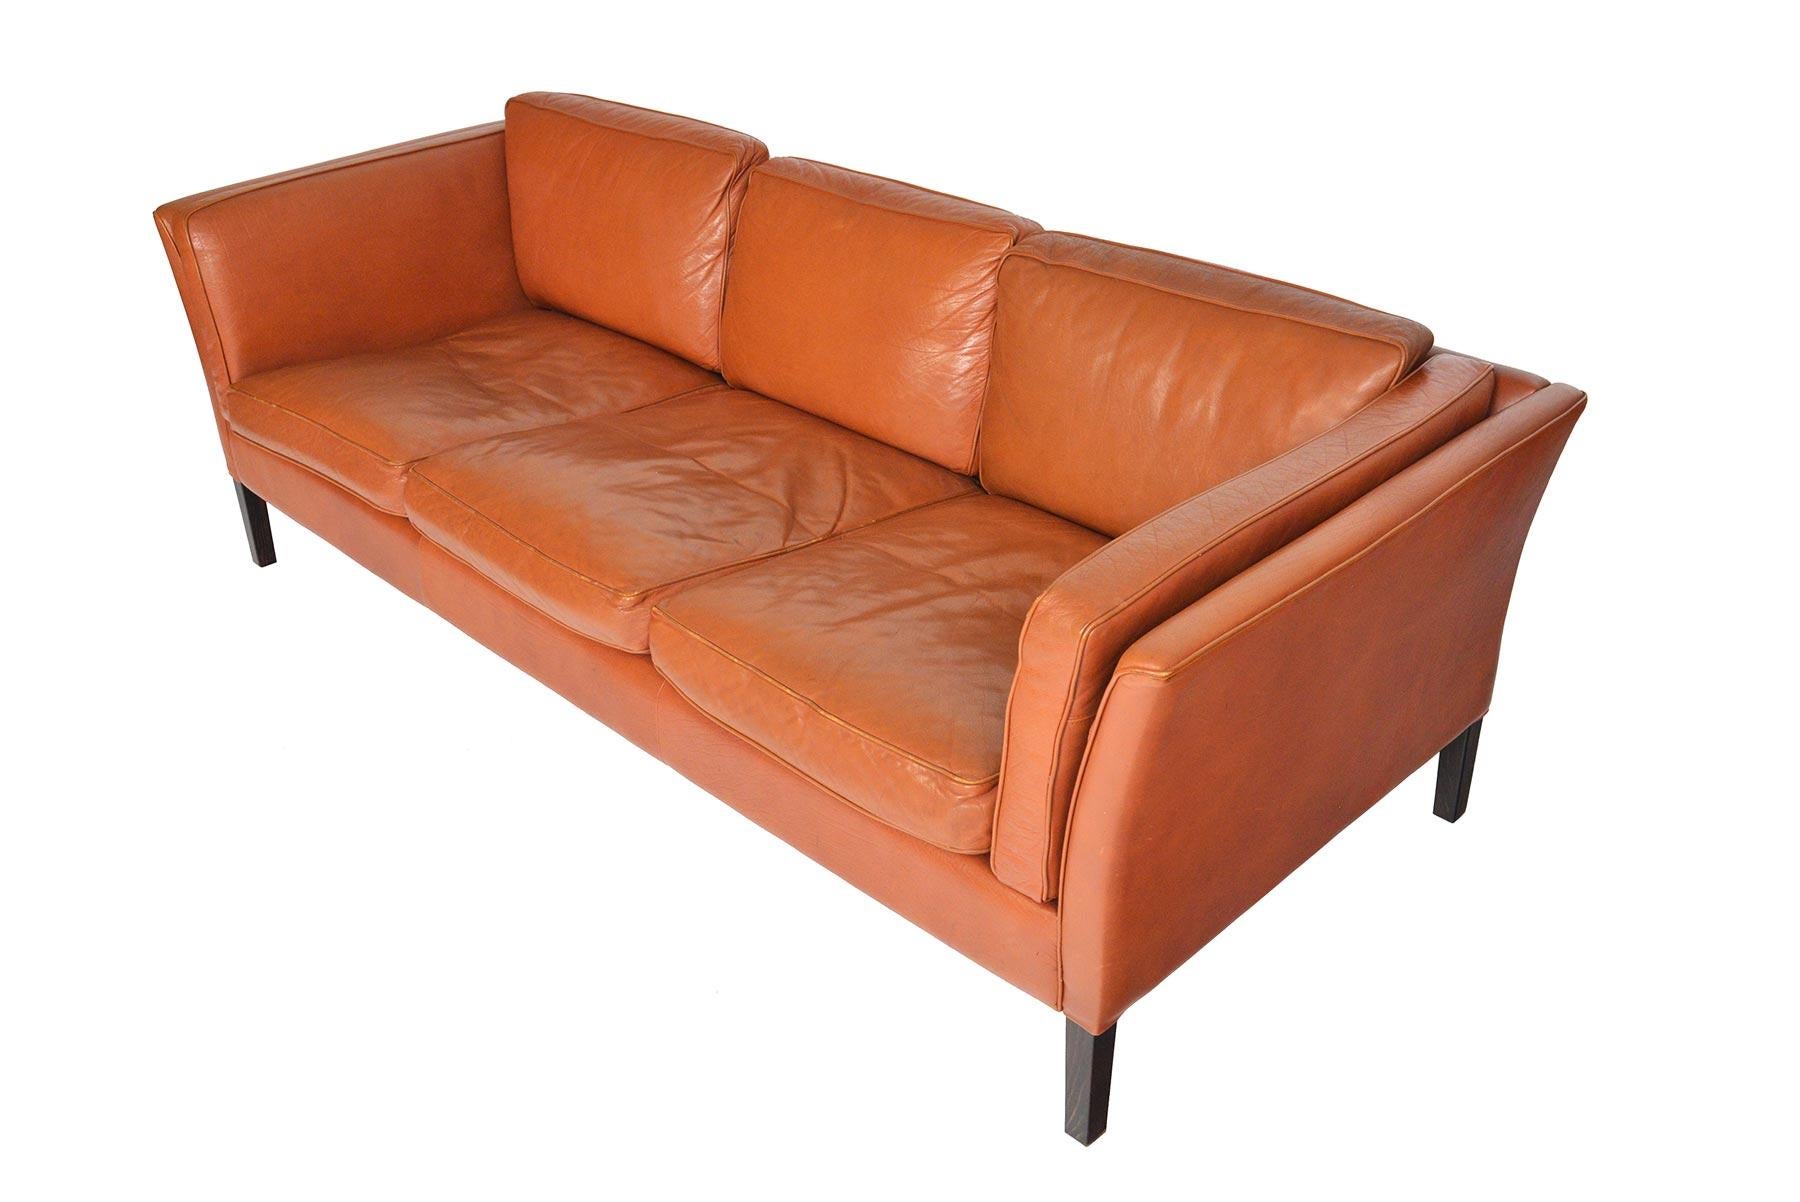 20th Century Danish Mid-Century Modern Three-Seat Leather Sofa in Cognac